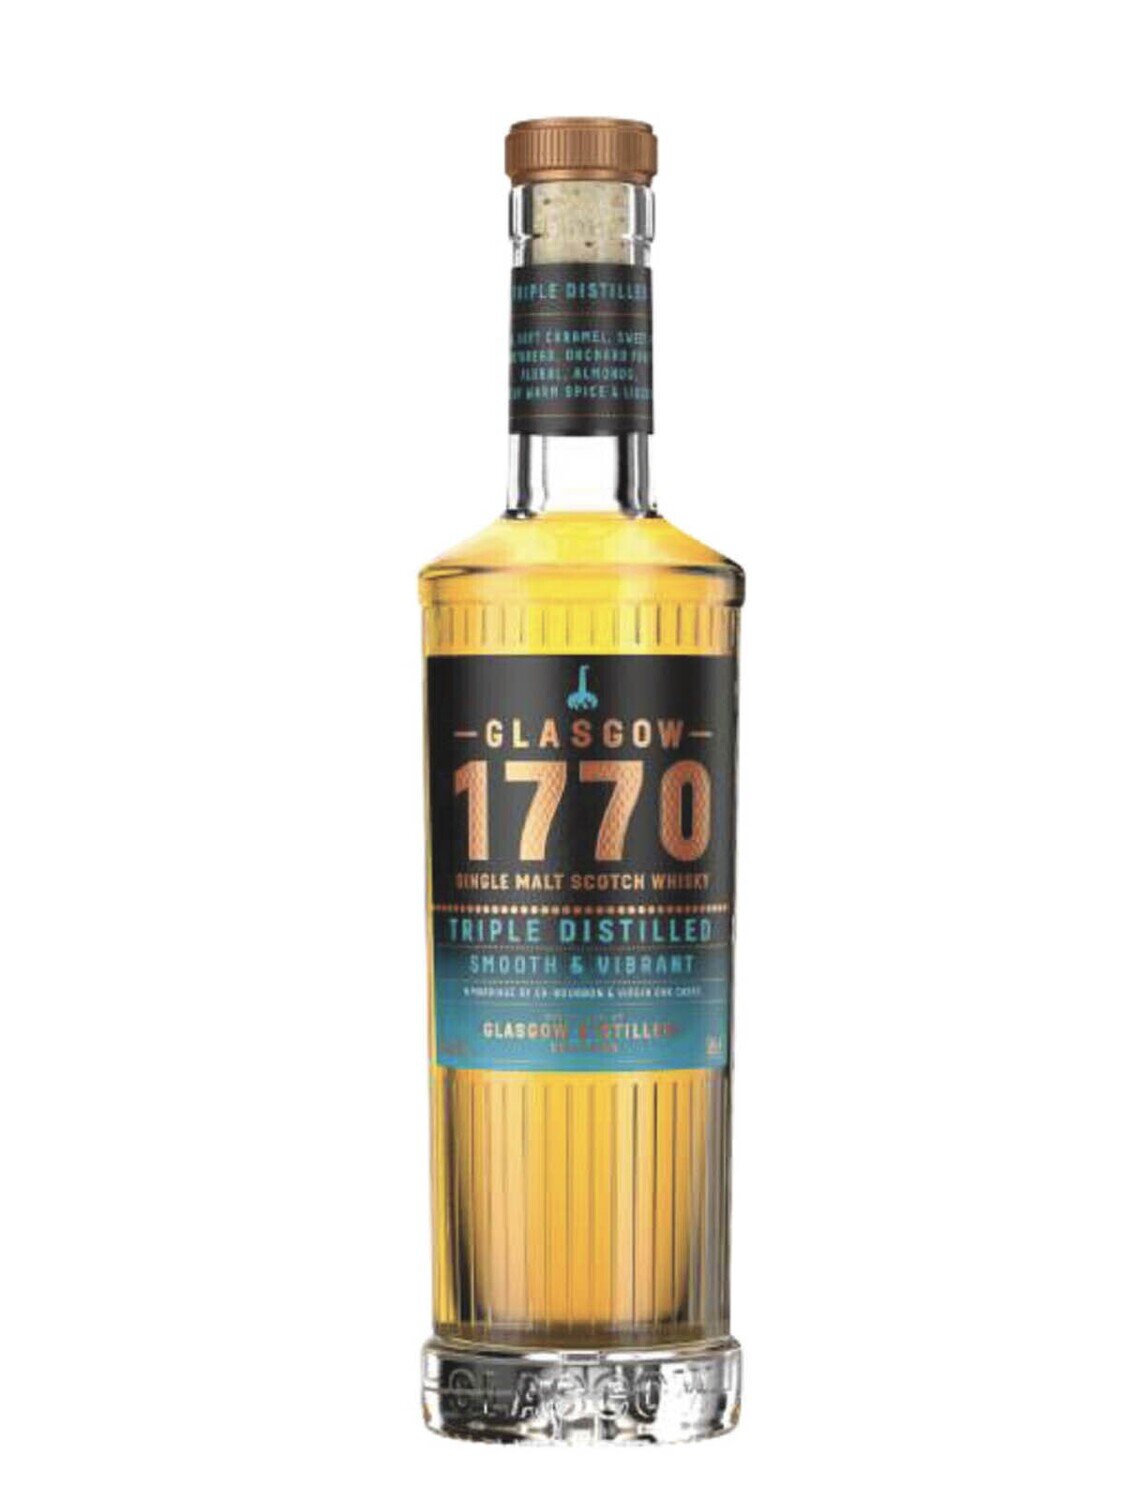 Glasgow 1770 Triple Distilled Release No. 1 Single Malt Scotch Whisky 46% ABV 700mL